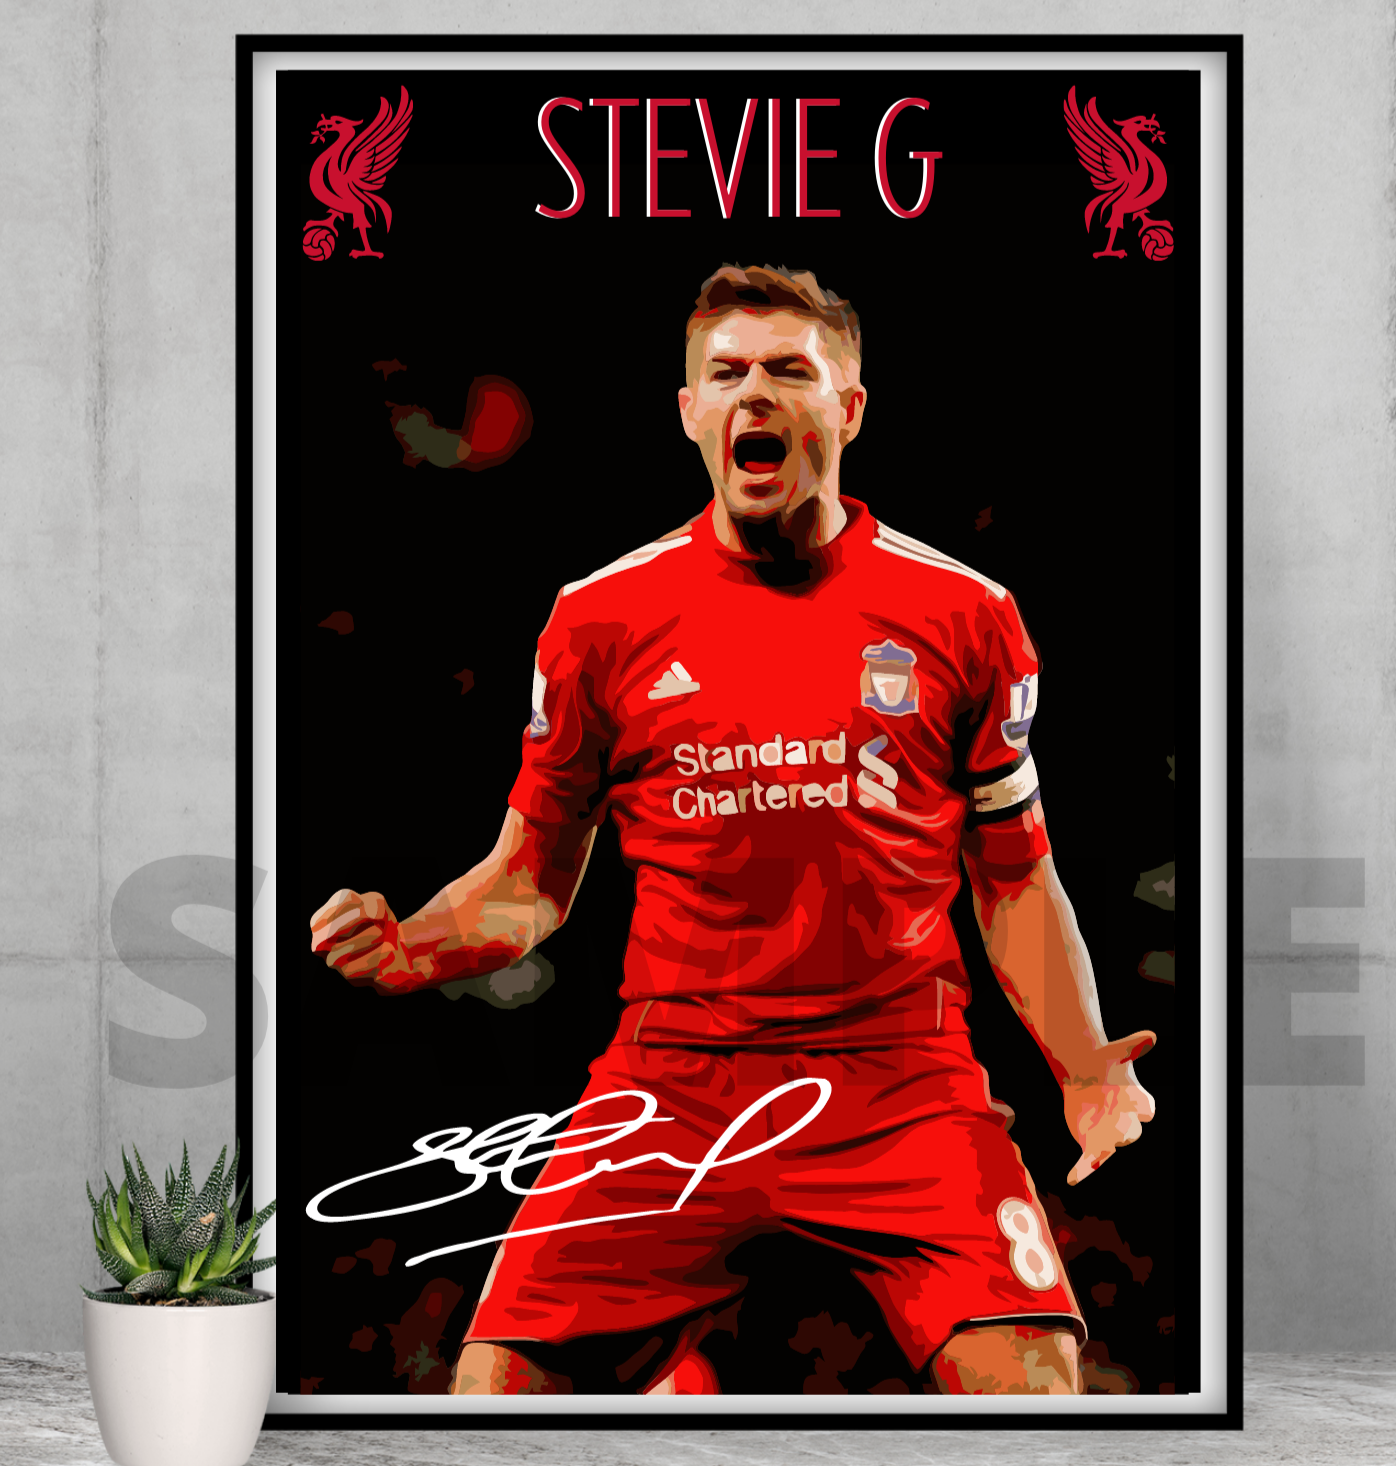 Stevie G (Liverpool) - Football ART Collectible/Memorabilia/Print signed